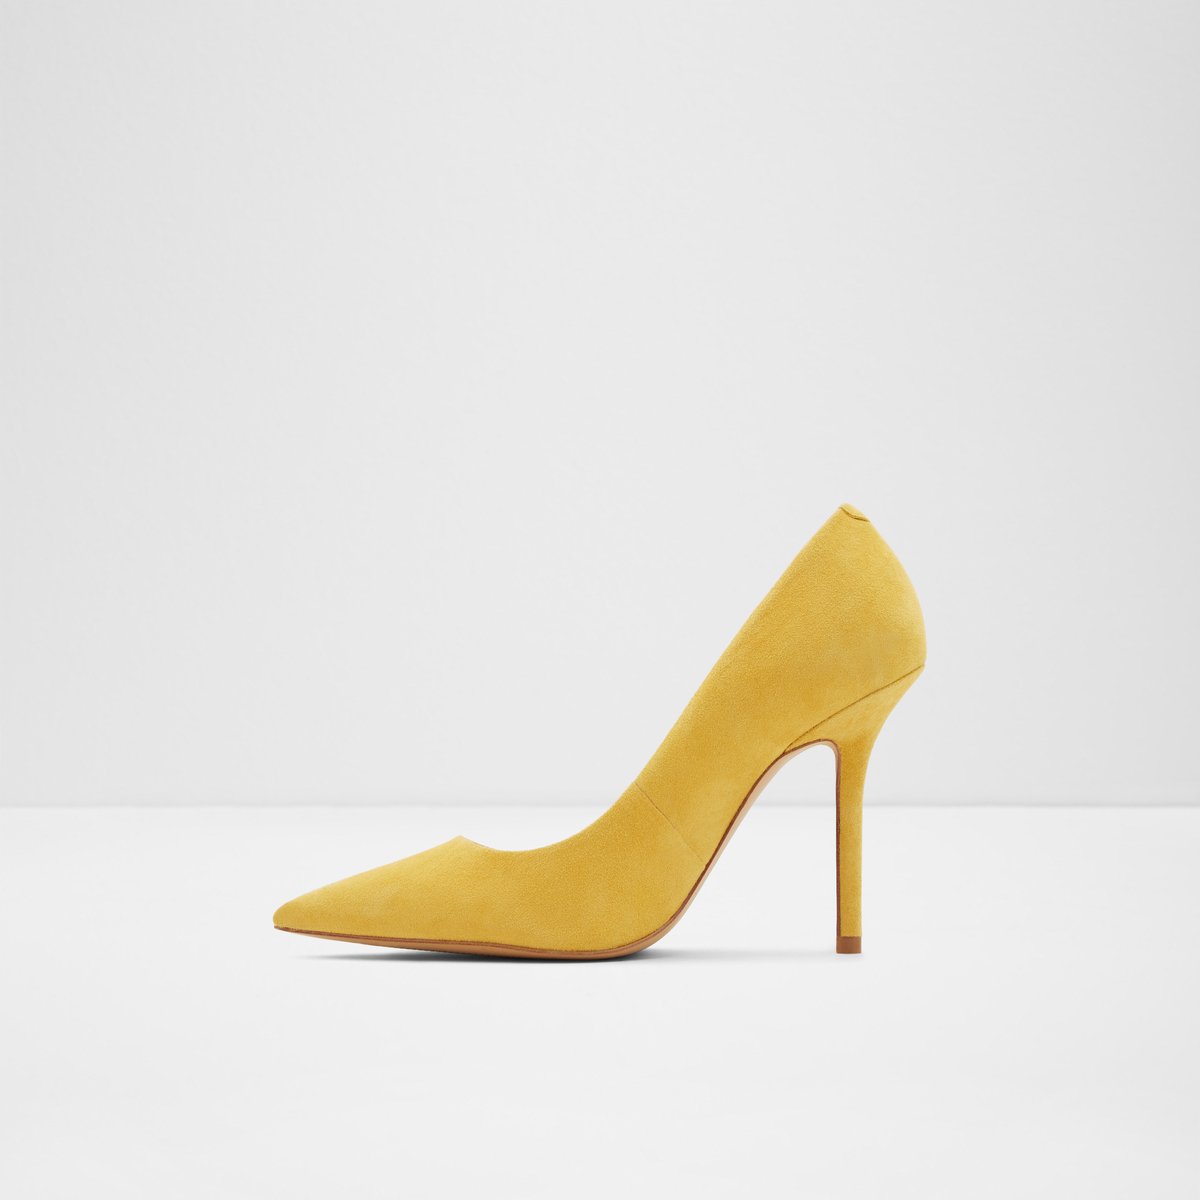 aldo shoes yellow